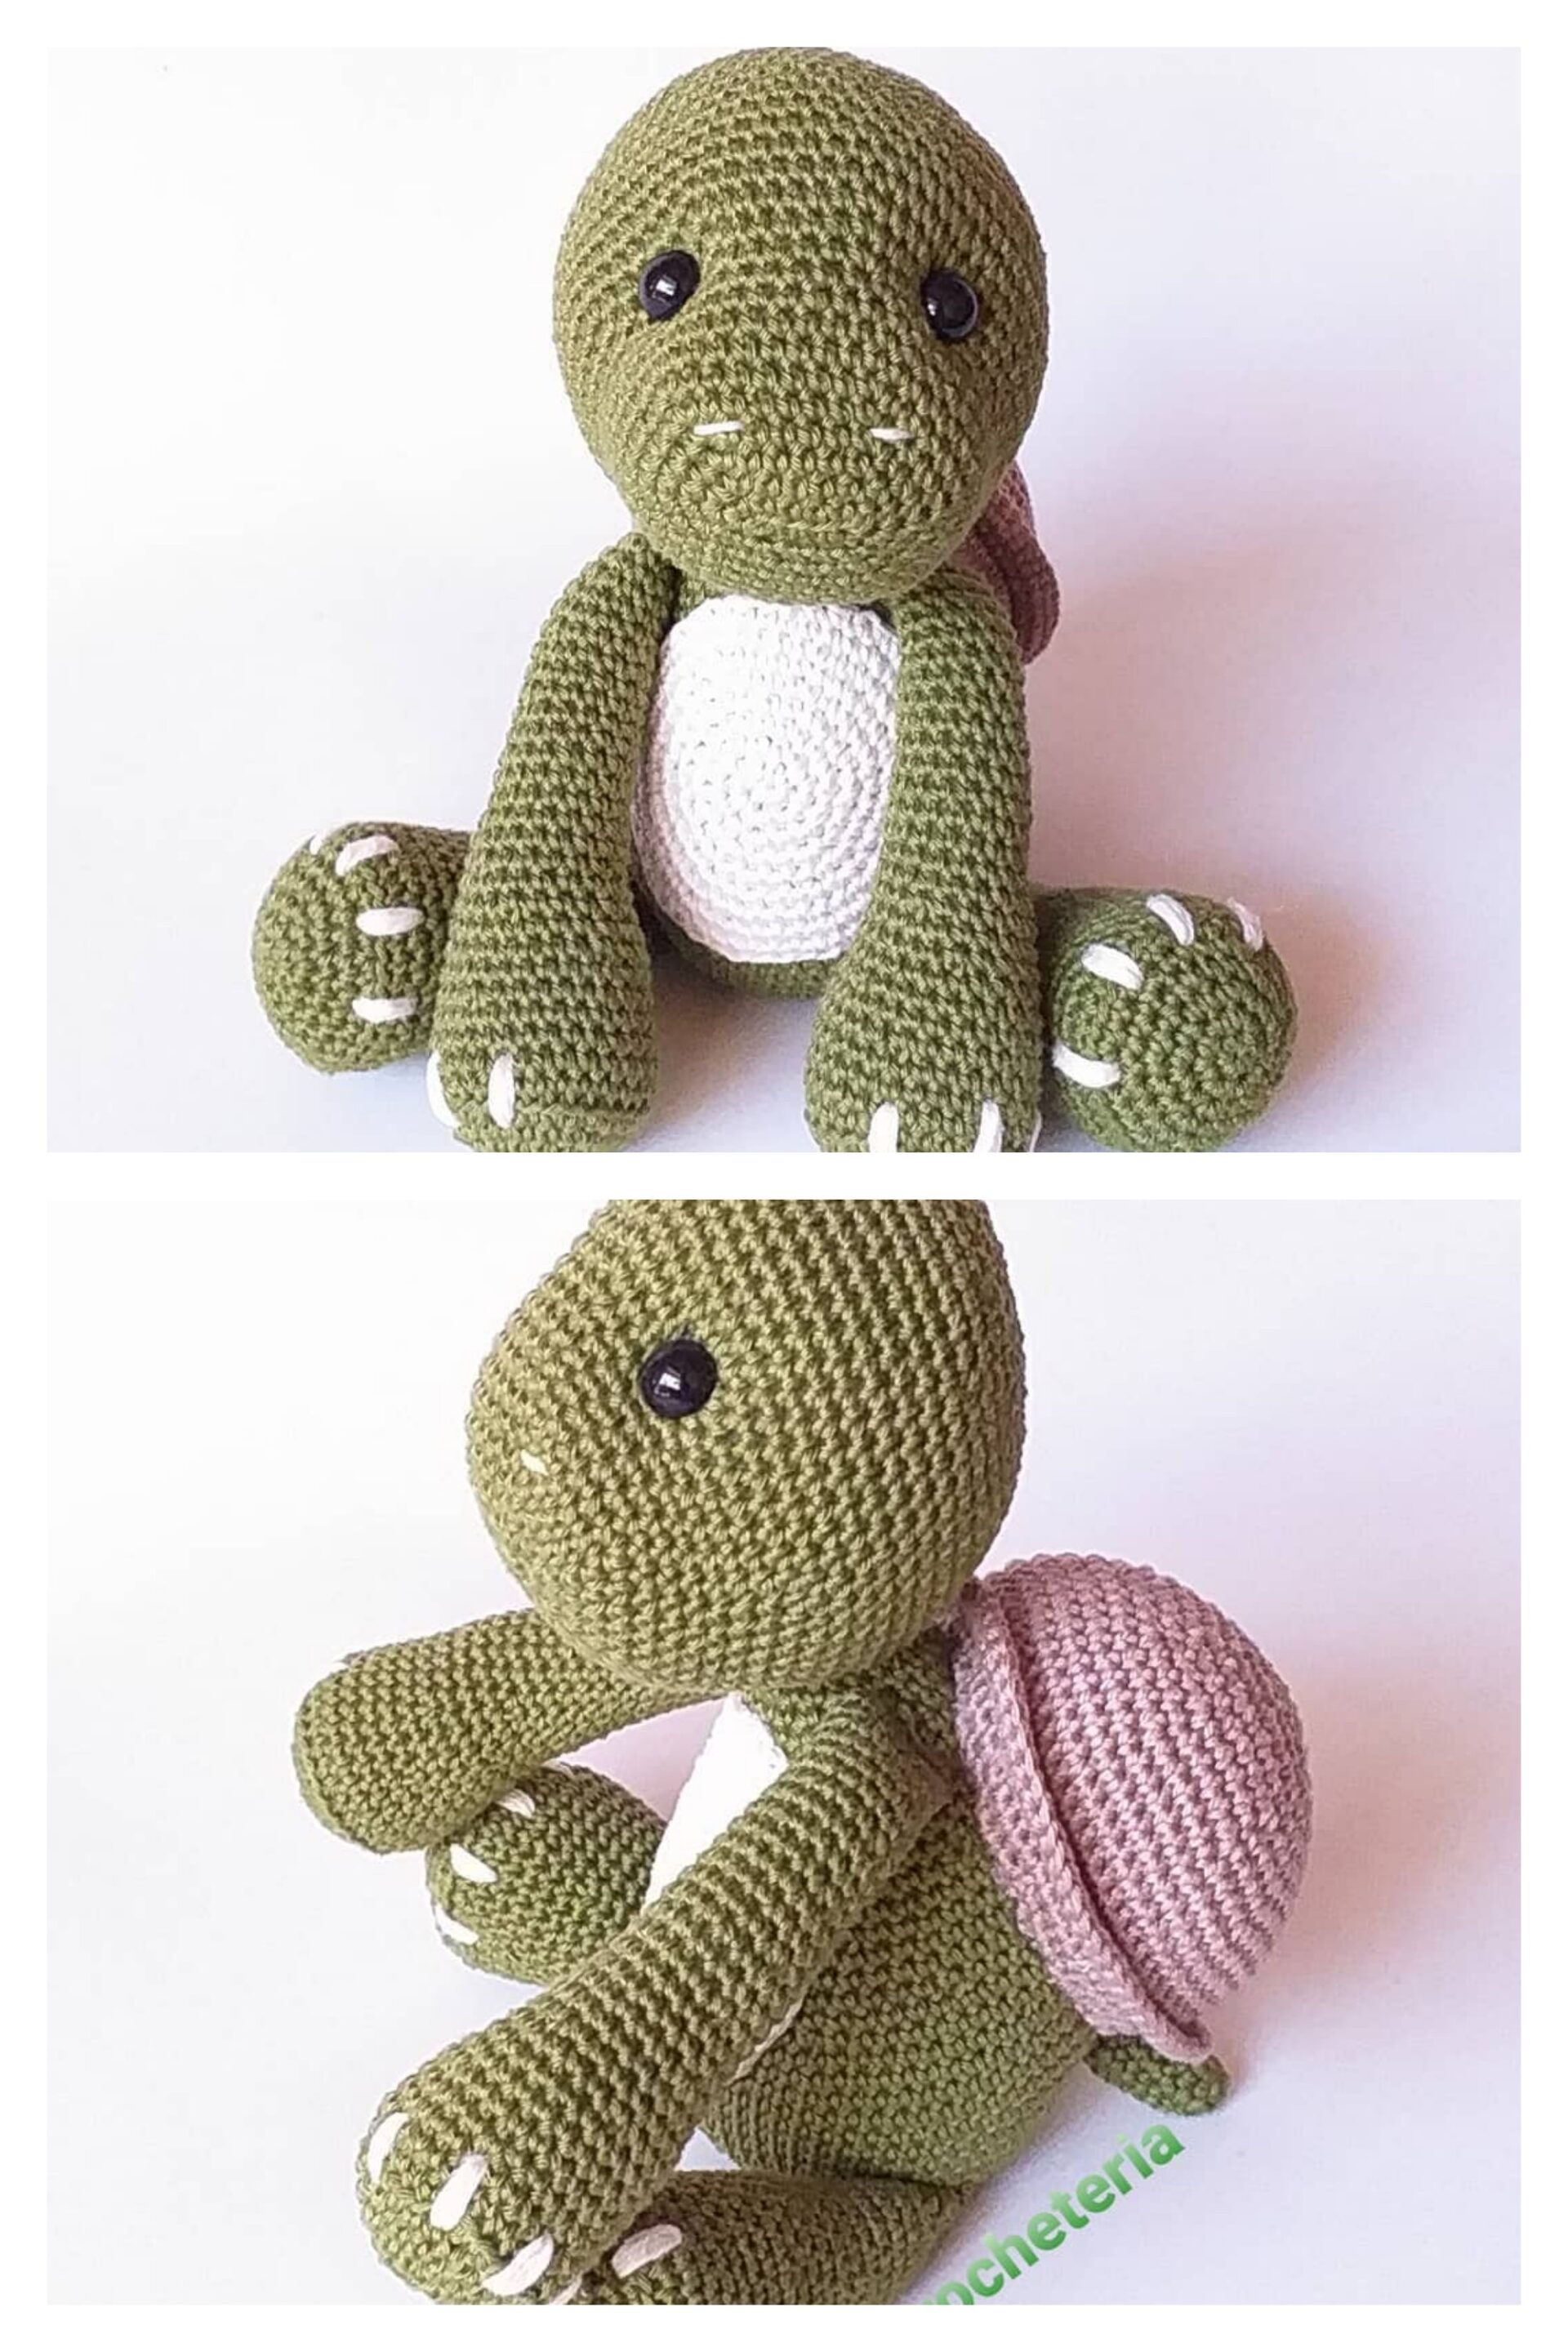 Amigurumi Rainbow Turtle Free Crochet Patterns – Free Amigurumi Patterns